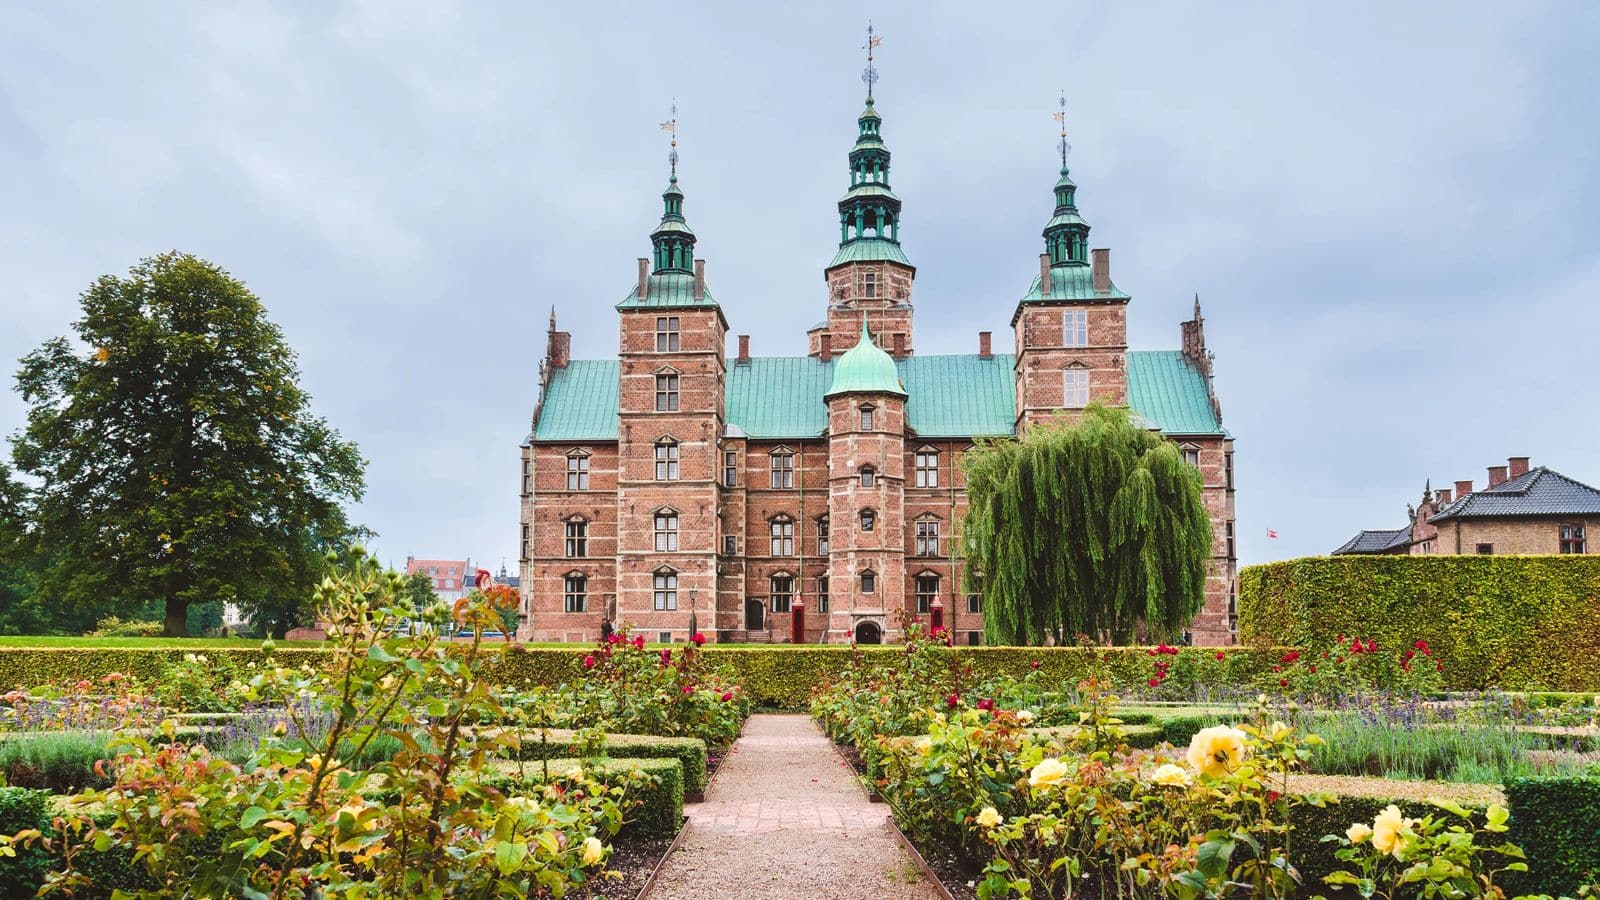 Take note of Copenhagen's enchanting castle getaways